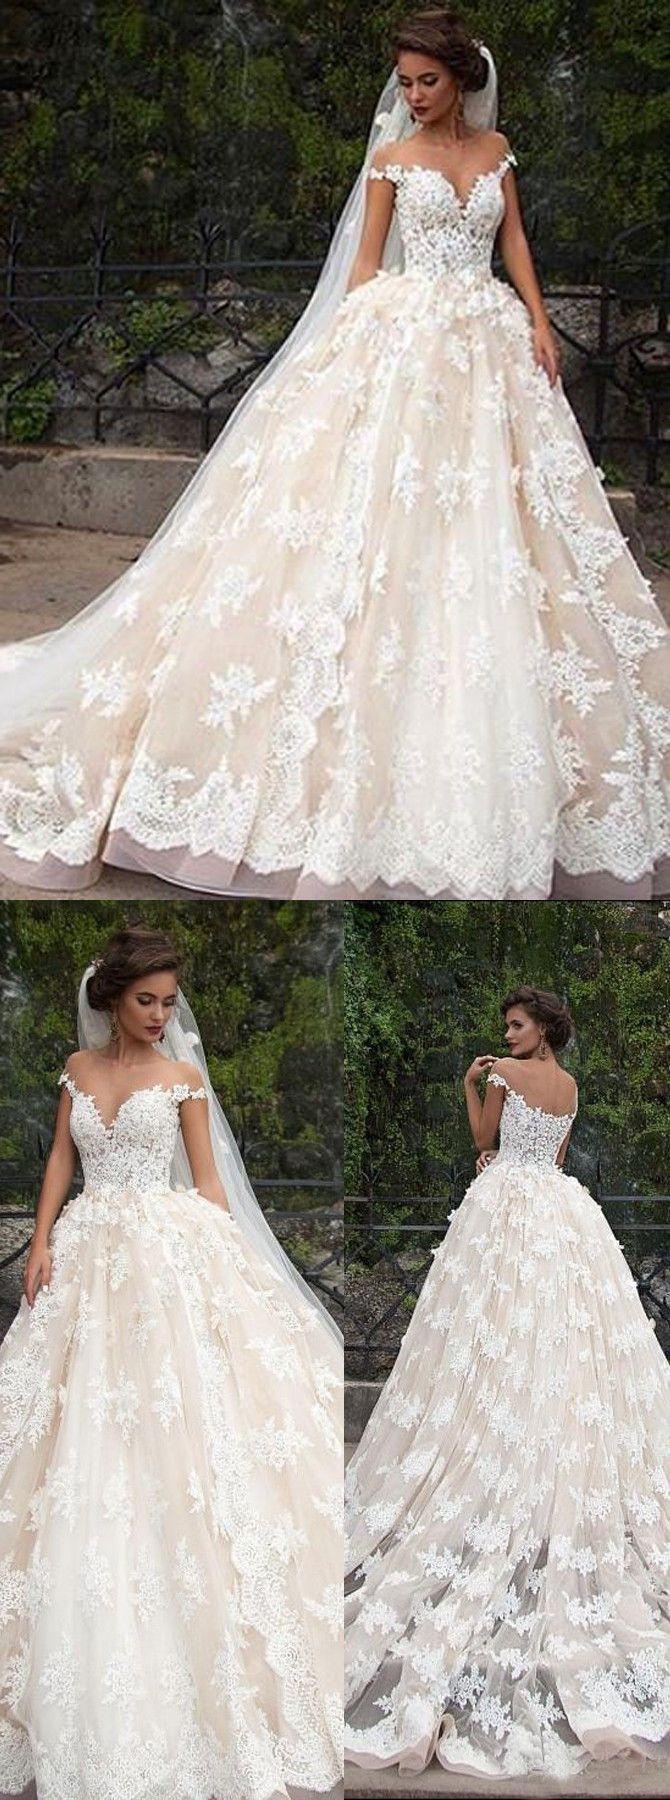 Wedding - Glamorous Jewel Cap Sleeves Court Train Wedding Dress With Lace Top